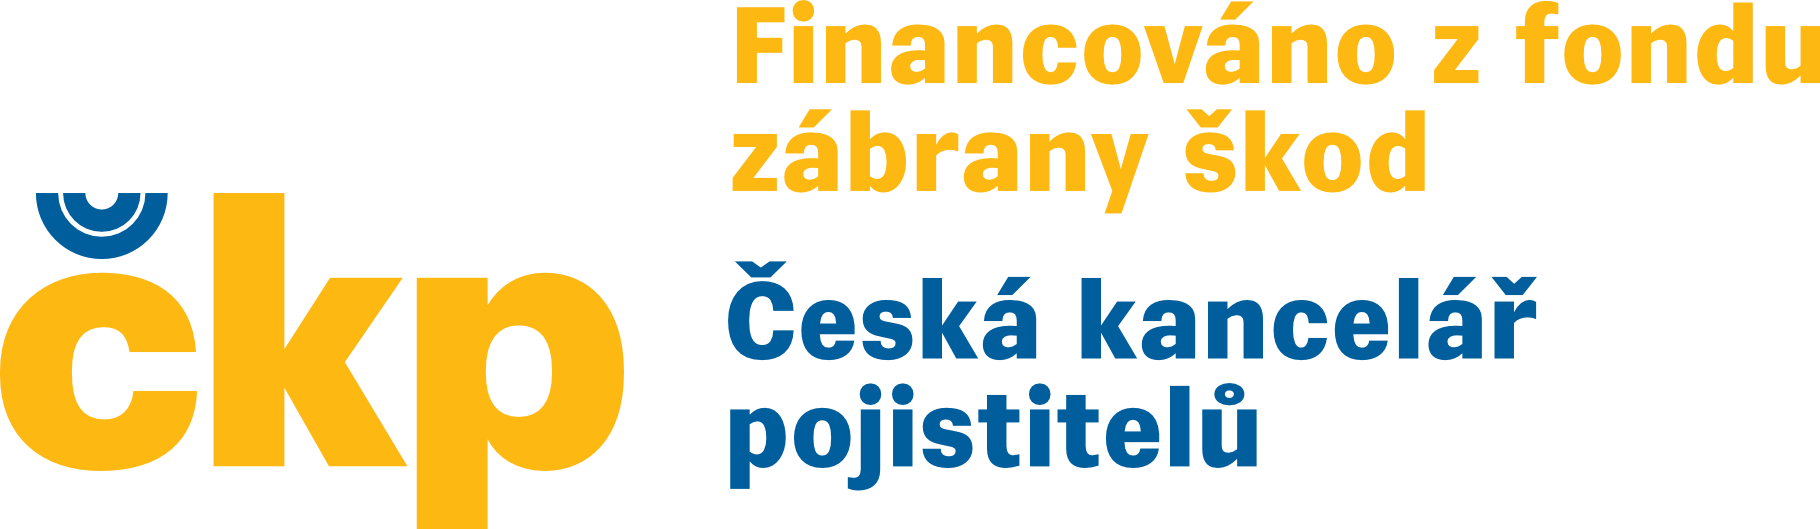 CKP_Financovani_Z_Fondu_Zabrany_Skod_barevne_4 radky_bez_pozadi.png